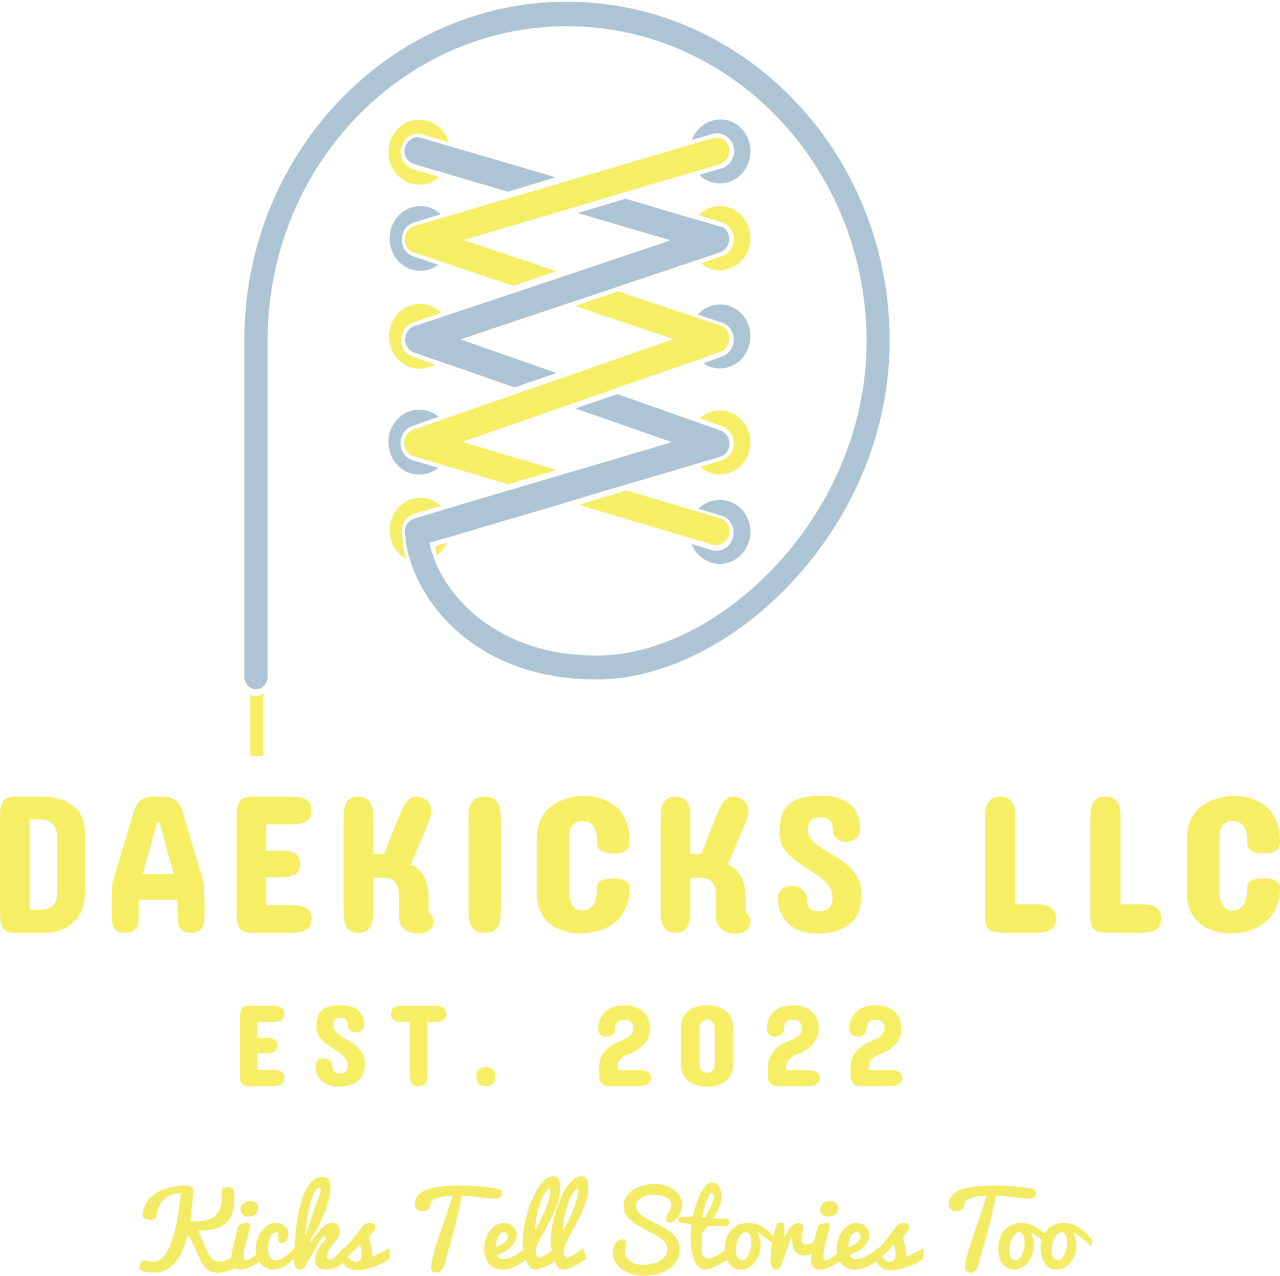 DAEKICKS LLC's logo